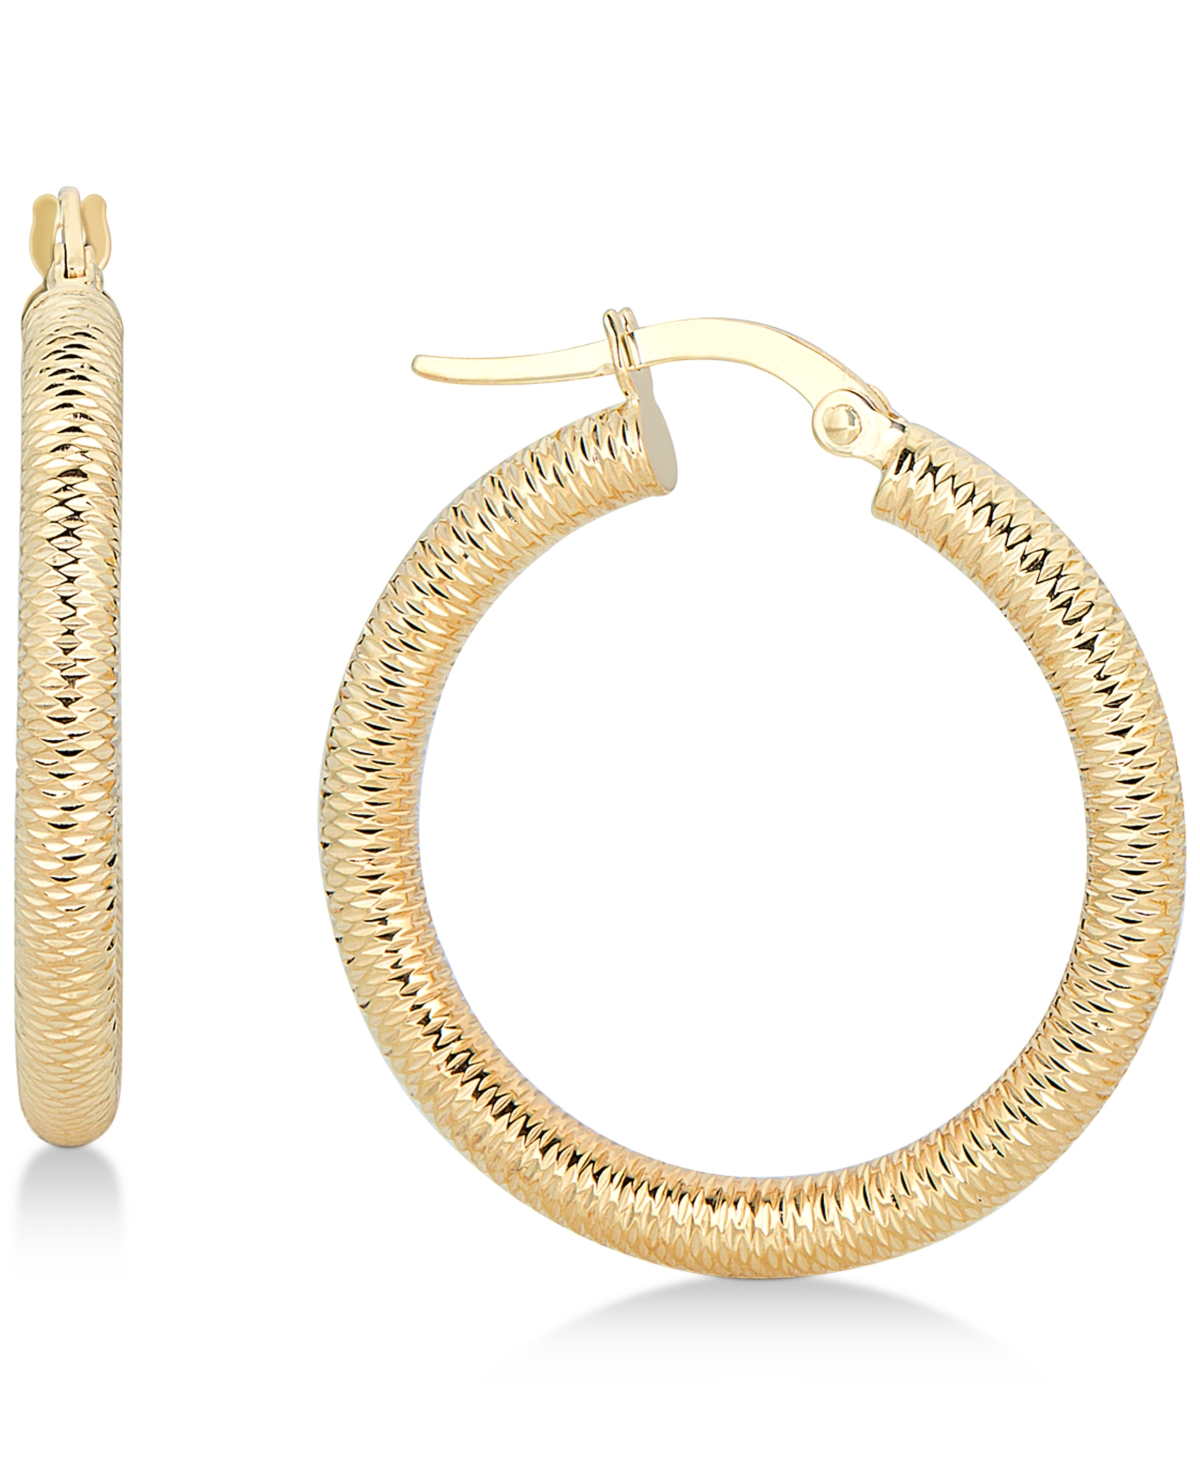 Textured Tube Hoop Earrings in 14k Gold - Gold